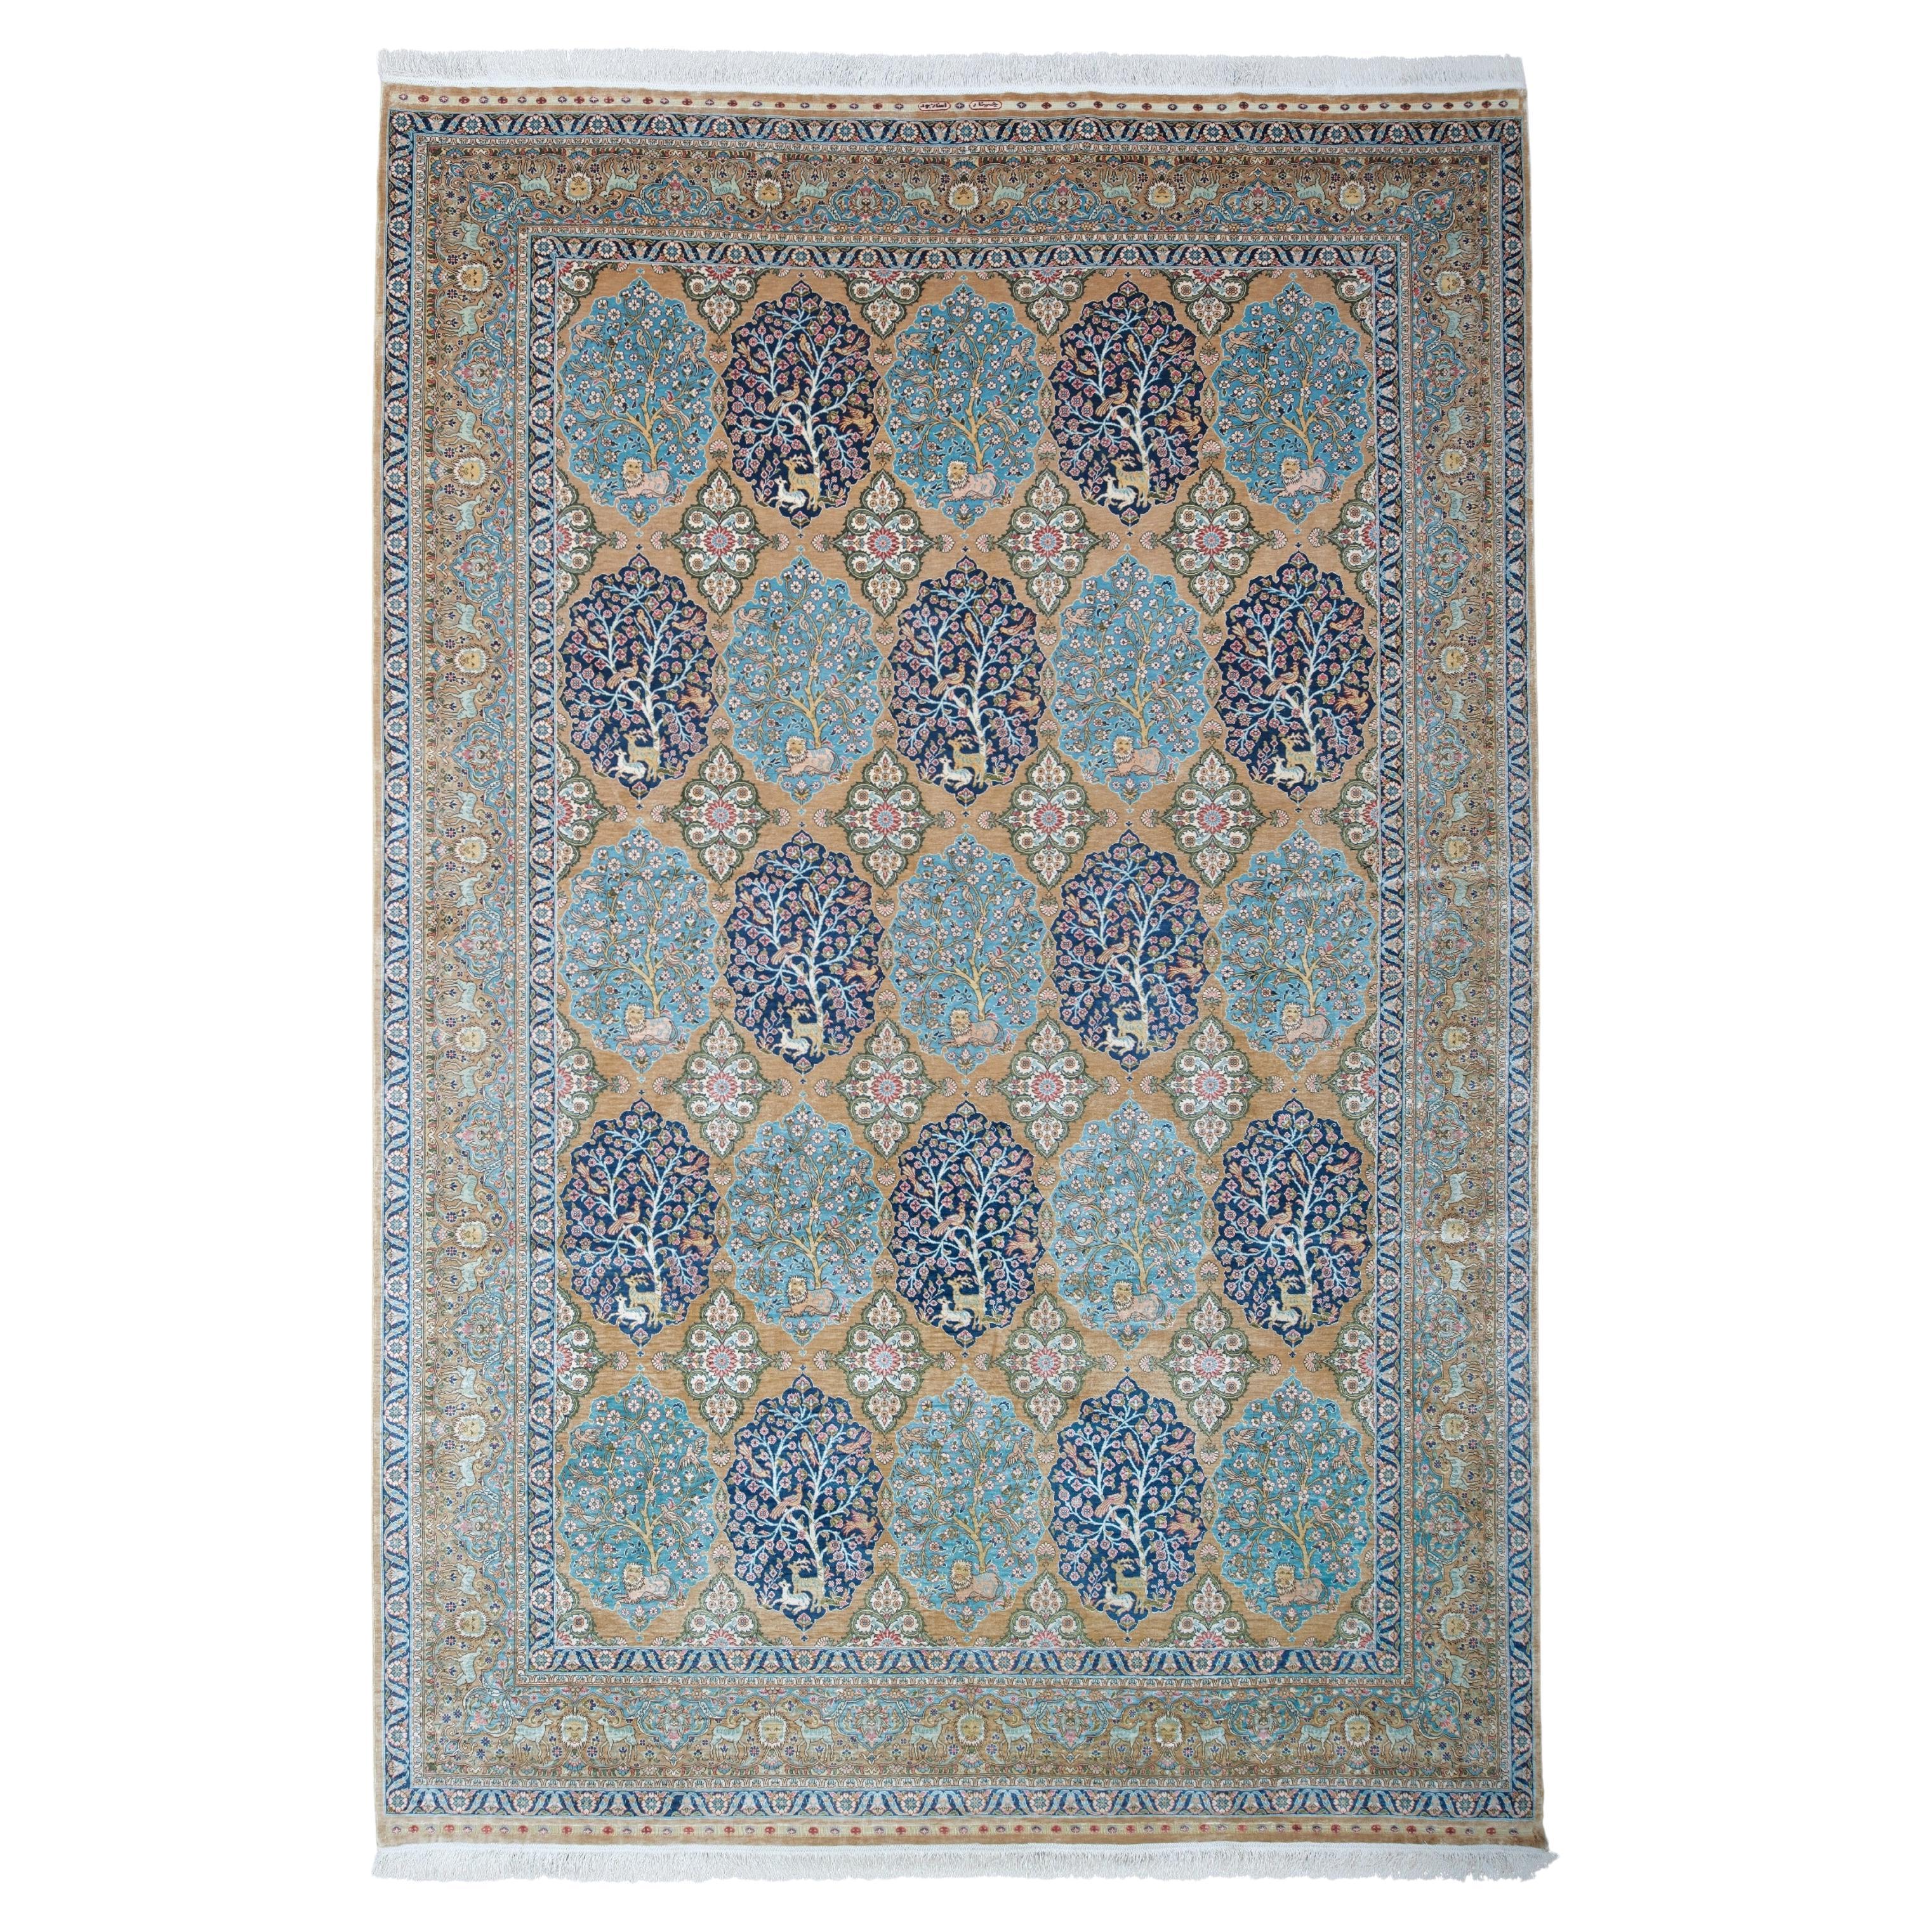 Early 20th Century Hereke Silk Carpet, Silk Carpet, Antique Silk Rug